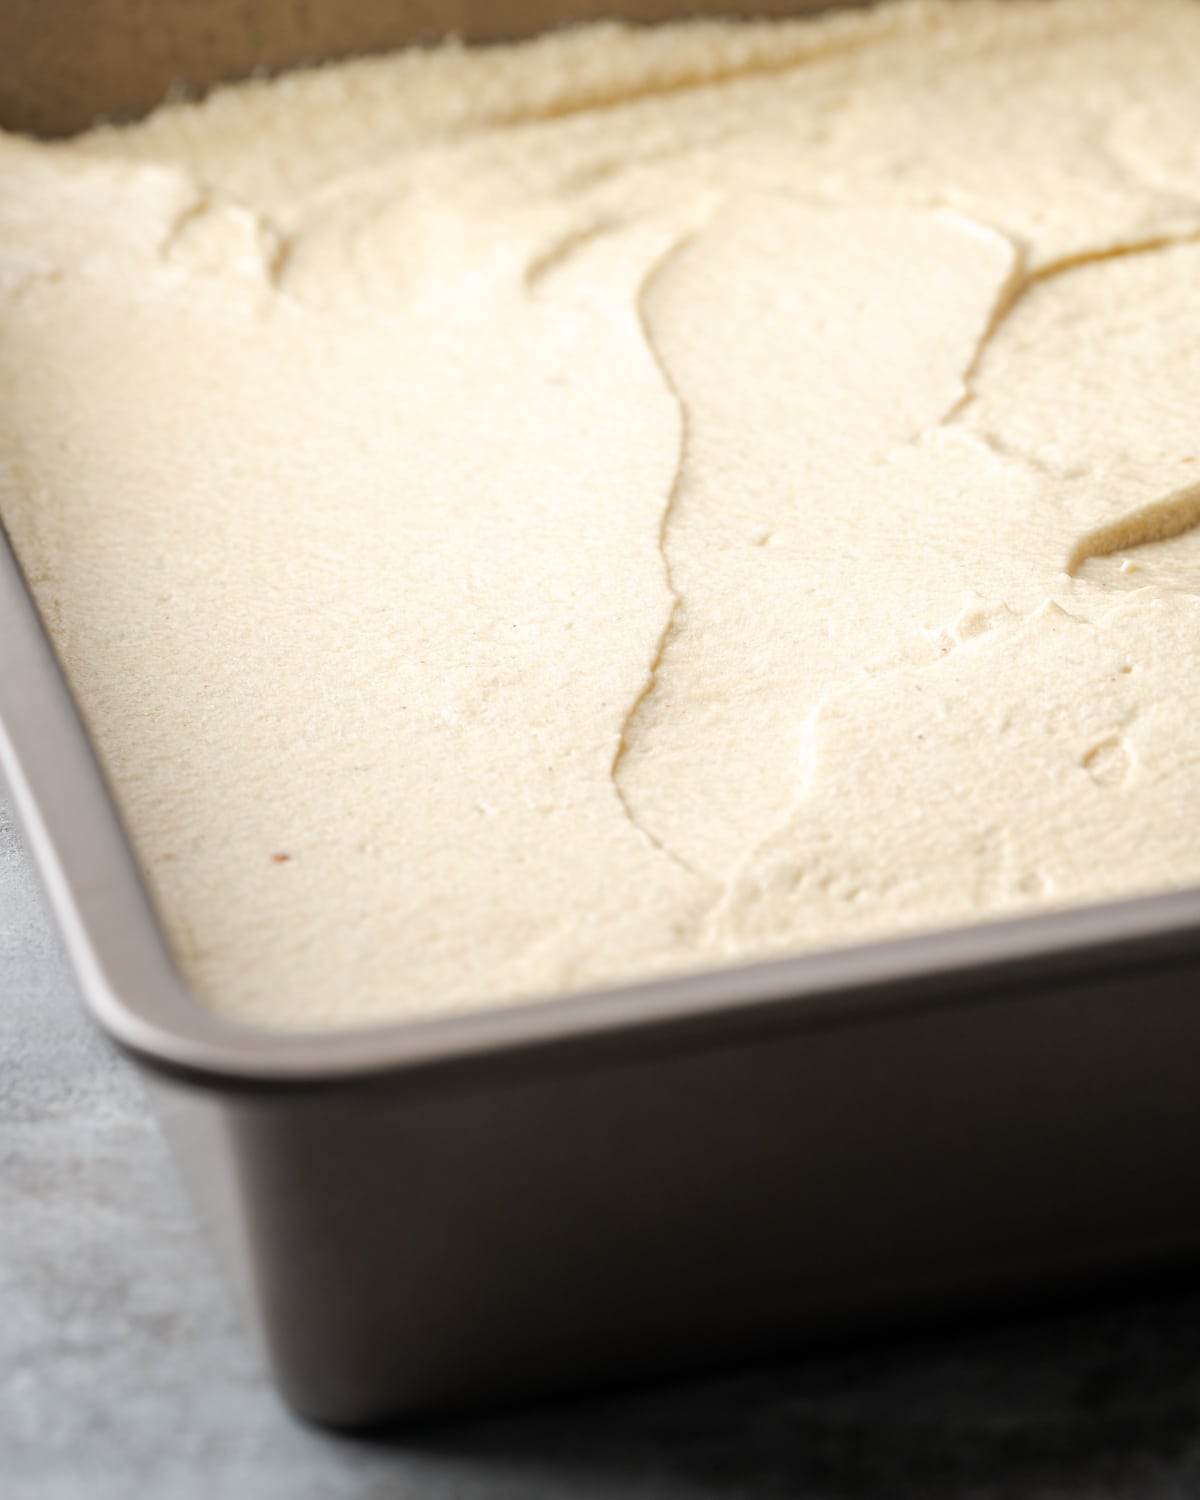 Vanilla cake batter spread evenly in a metal baking pan.